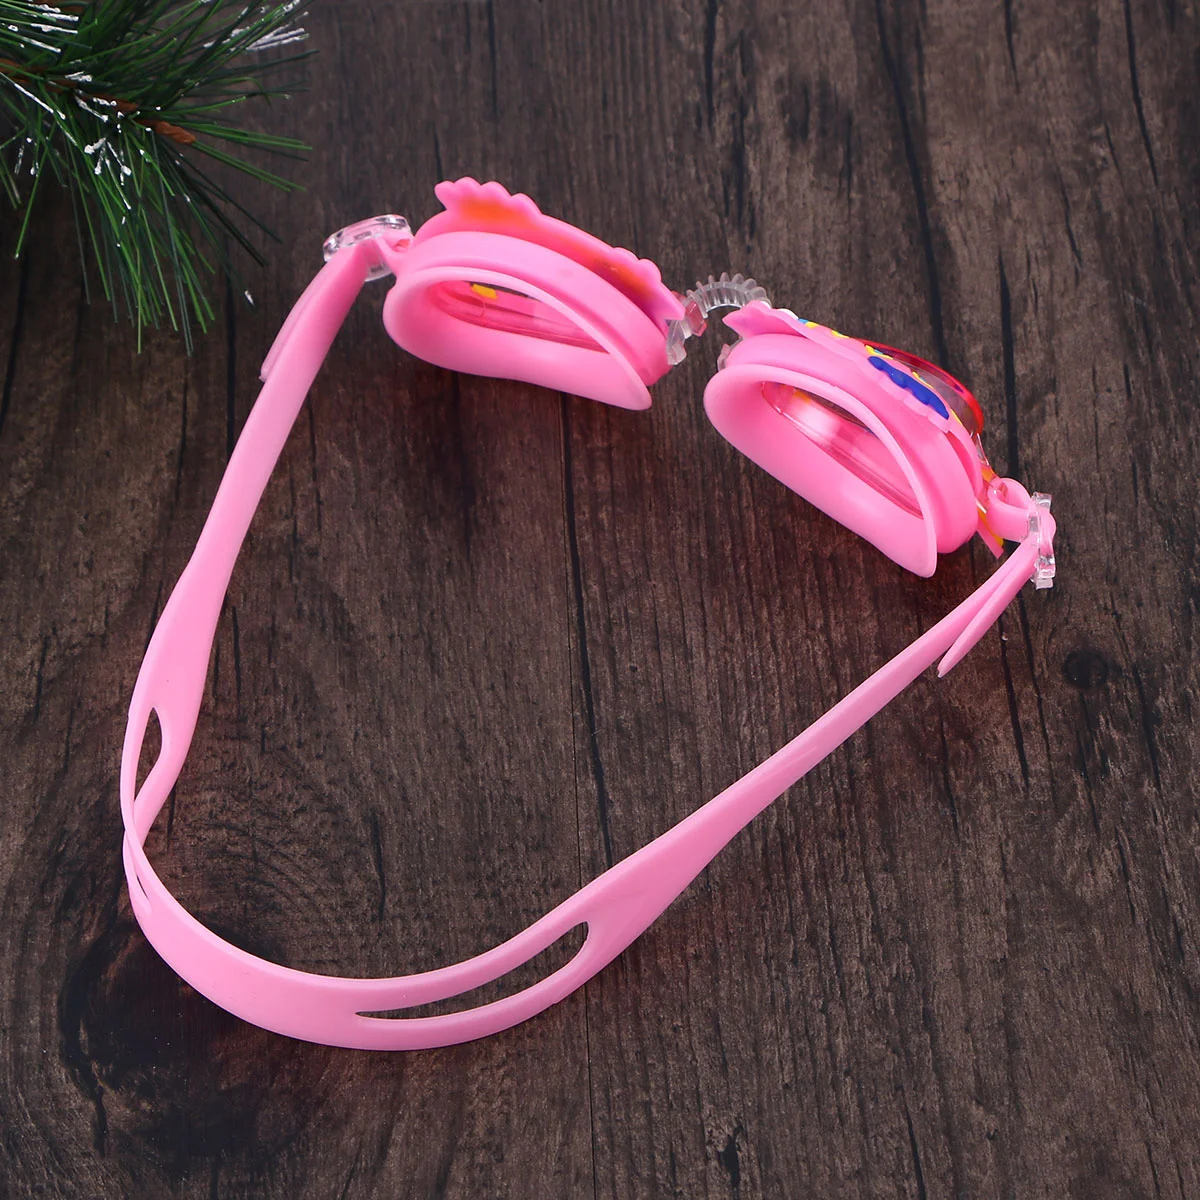 Waterproof Kids Swim Goggles Anti-Fog Fish Decoration Children Swimming Glasses Beach Pool Accessories Eyewear(Pink)